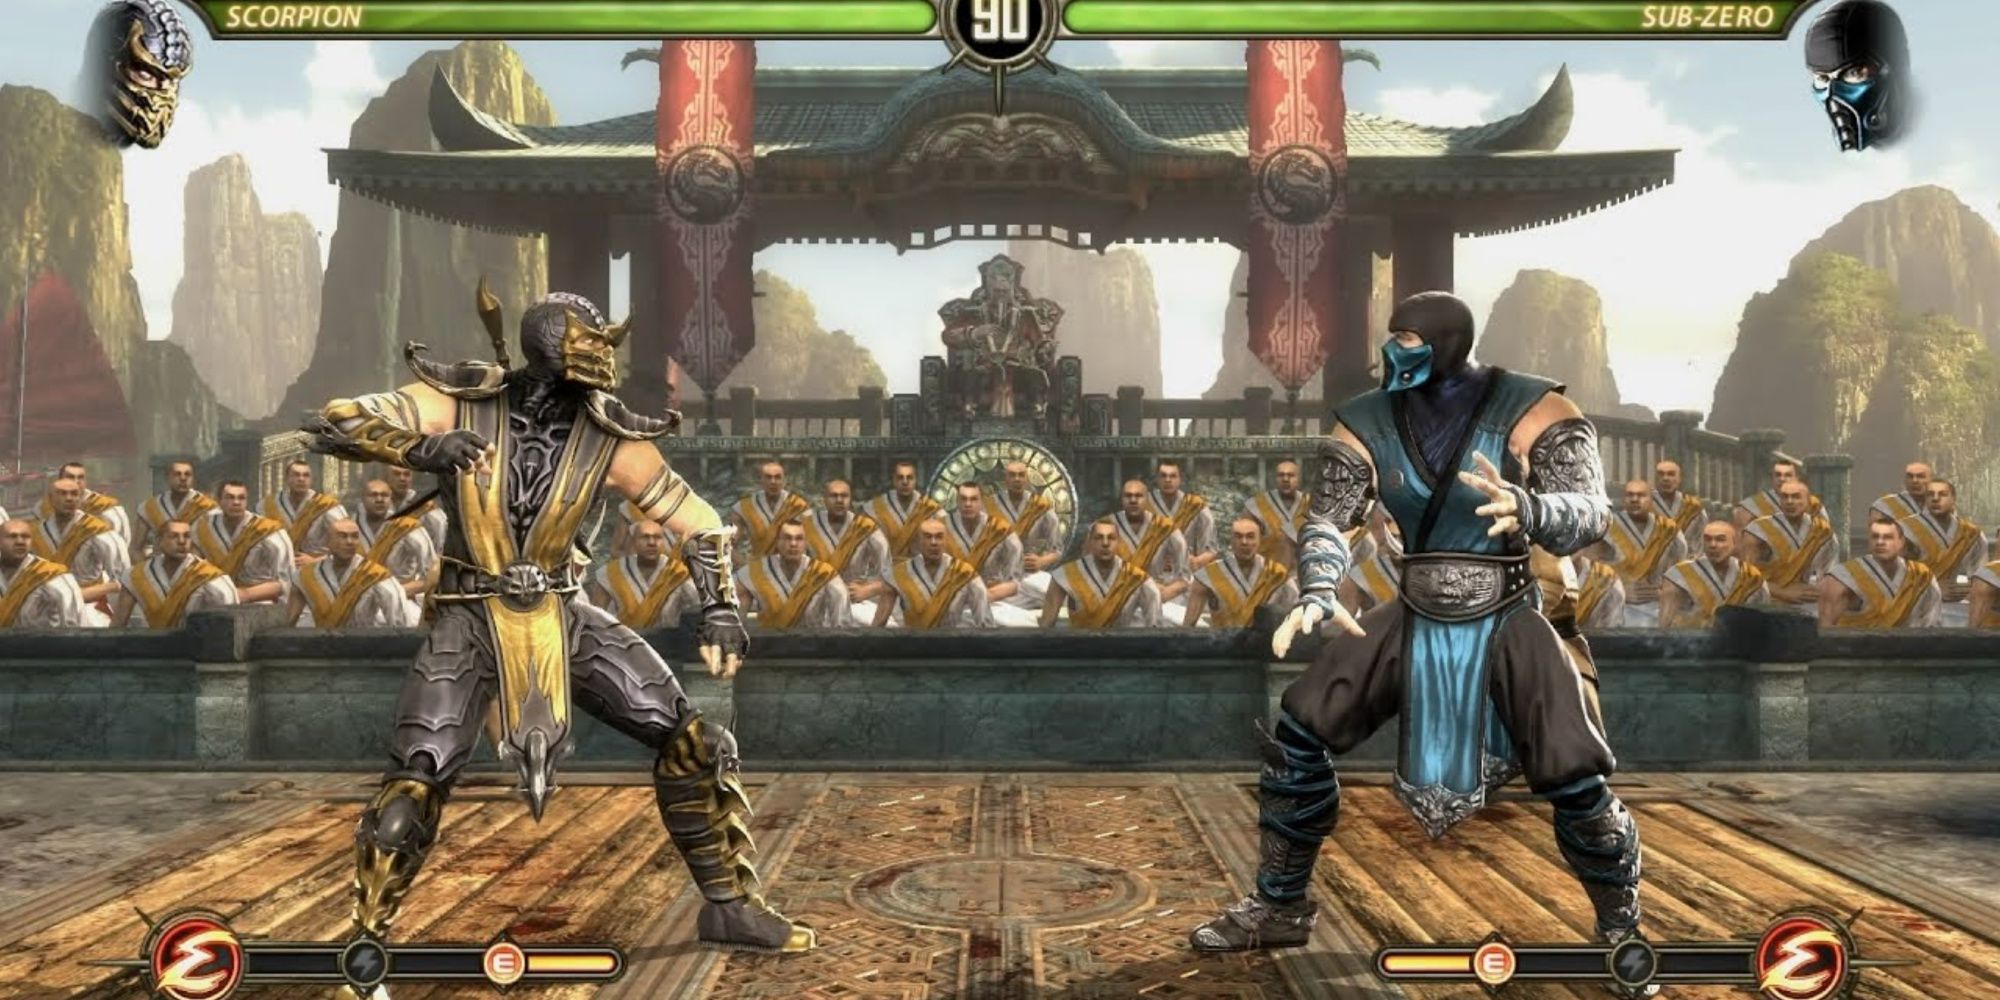 Playing a match in Mortal Kombat (2011)